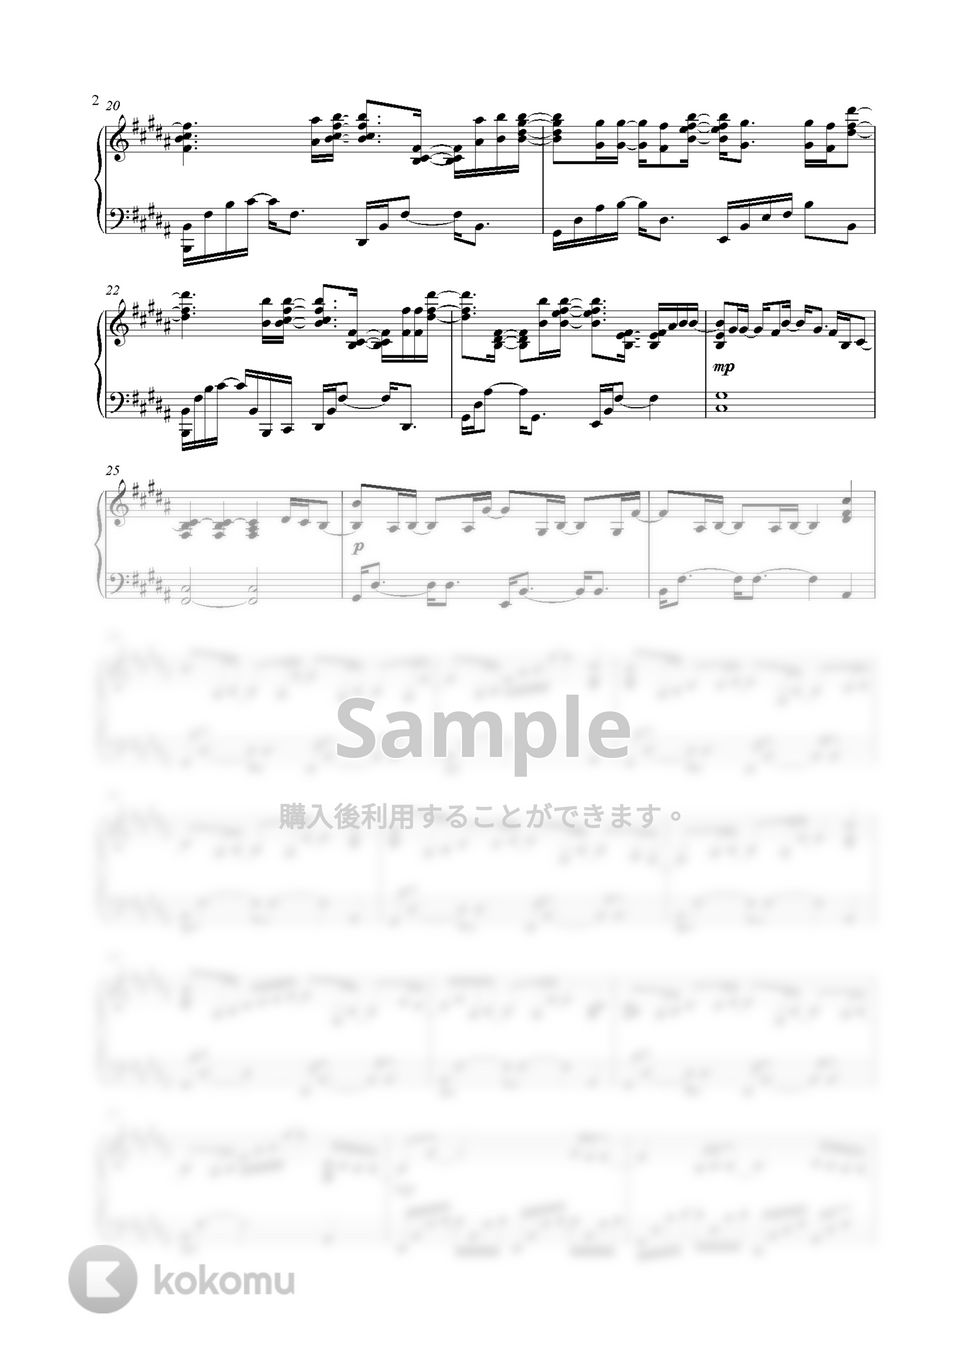 IU - Love poem (Piano Version) by GoGoPiano